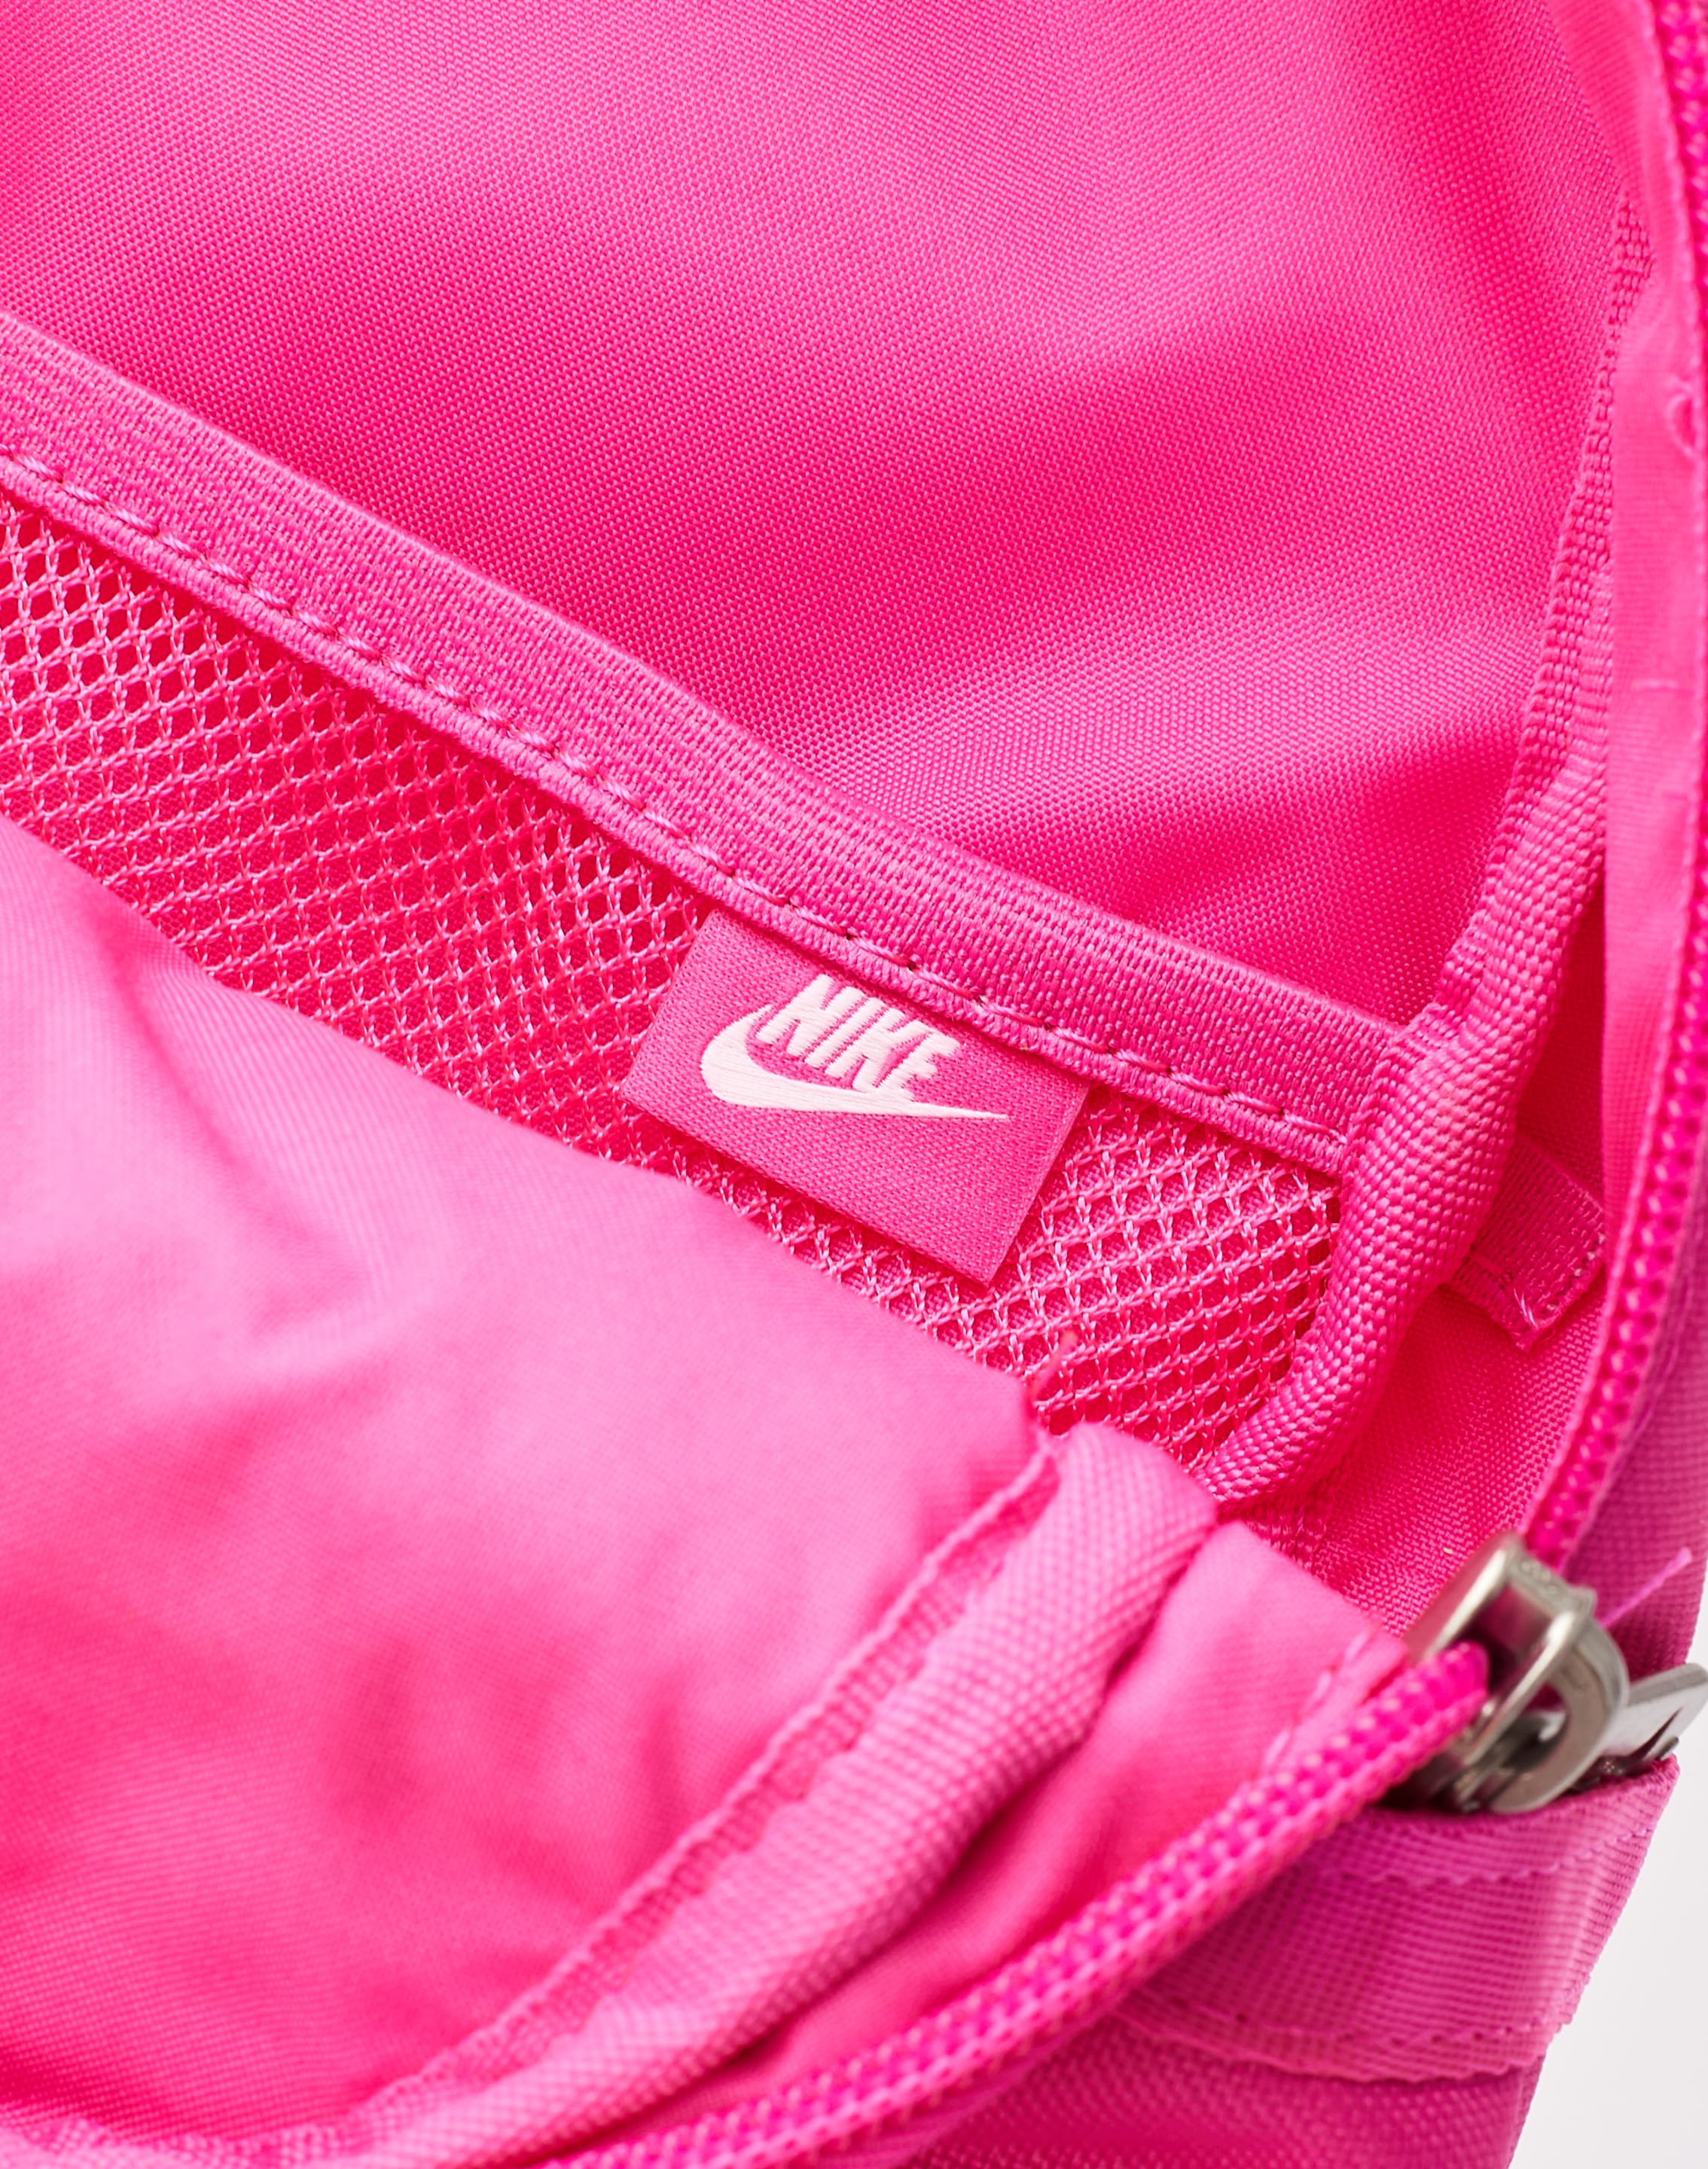 Off White Nike Unisex Futura 365 Mini Backpack, Accessories